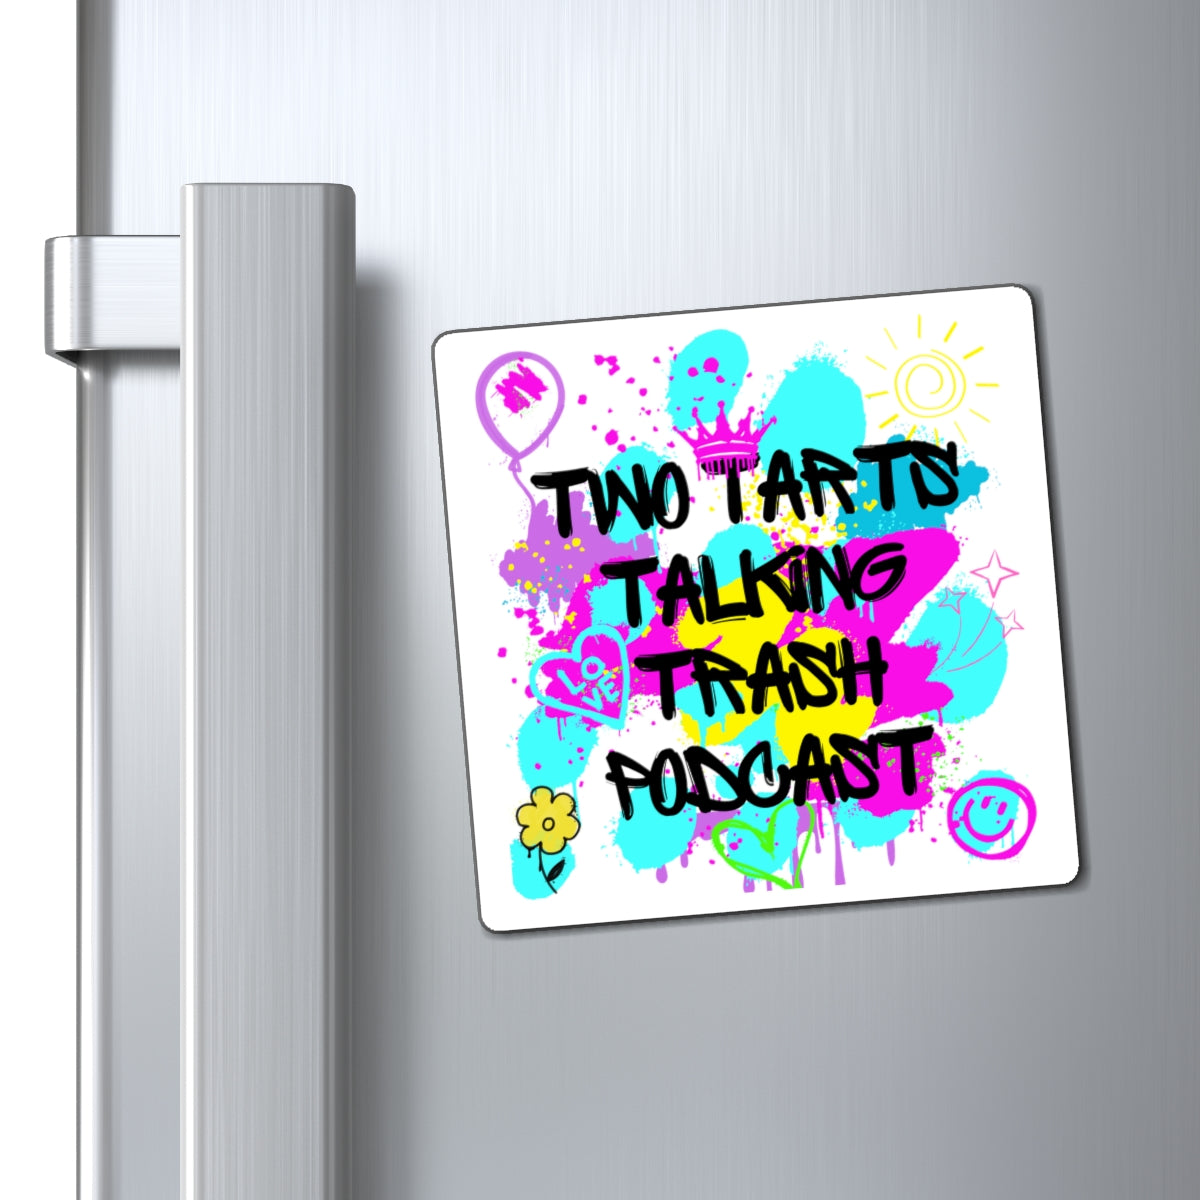 Two Tarts Talking Trash Podcast Graffiti Magnets